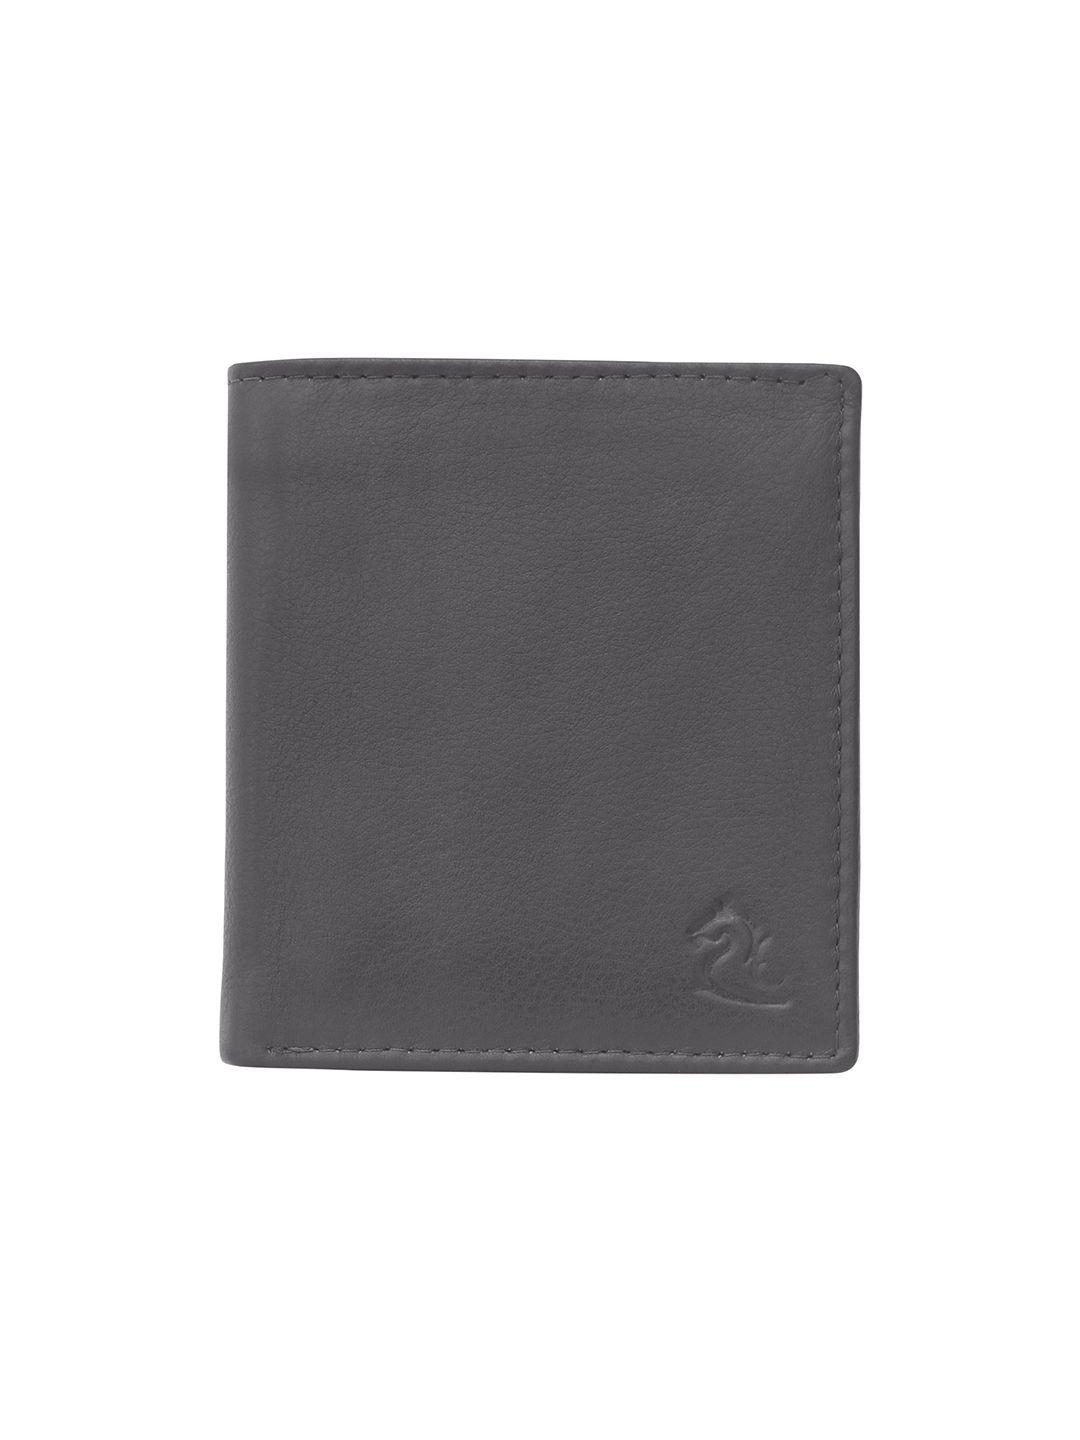 kara men brown solid two fold leather wallet